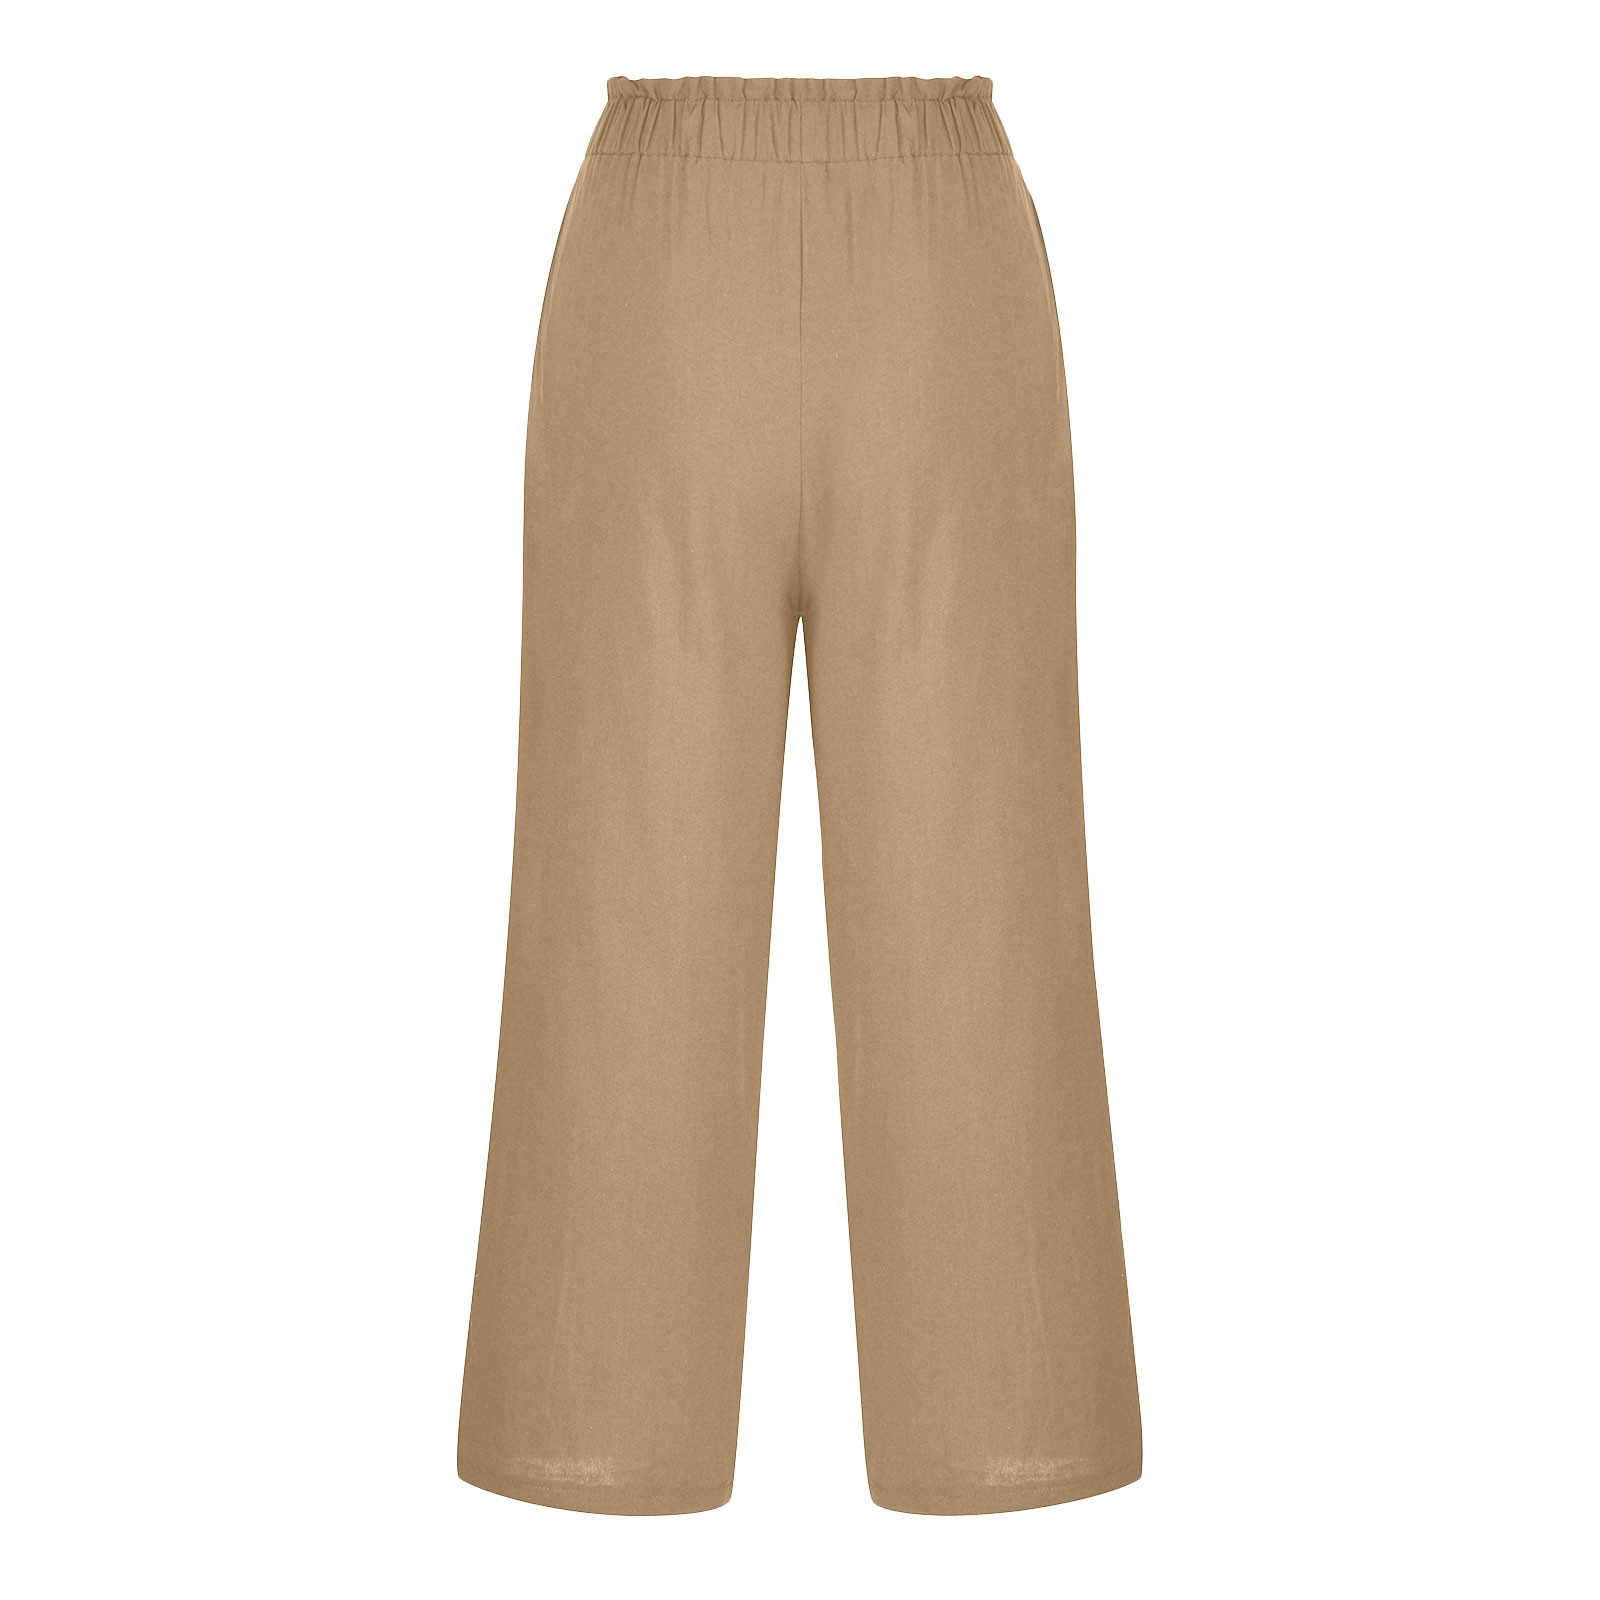 pbnbp Womens Pull On Capris Casual Solid Cotton Linen Capri Pants for ...